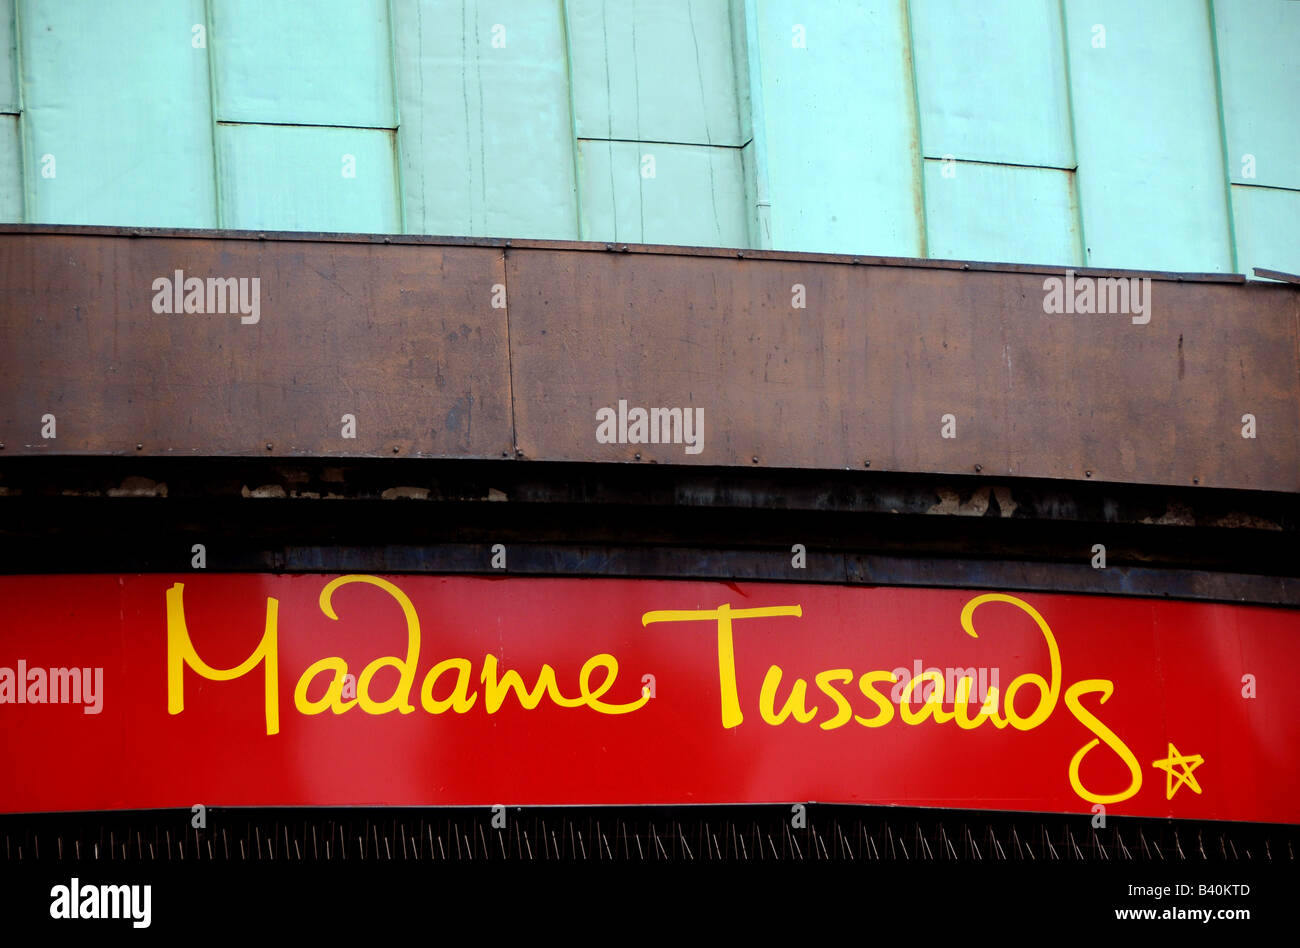 Madame Tussauds, London, England Stock Photo